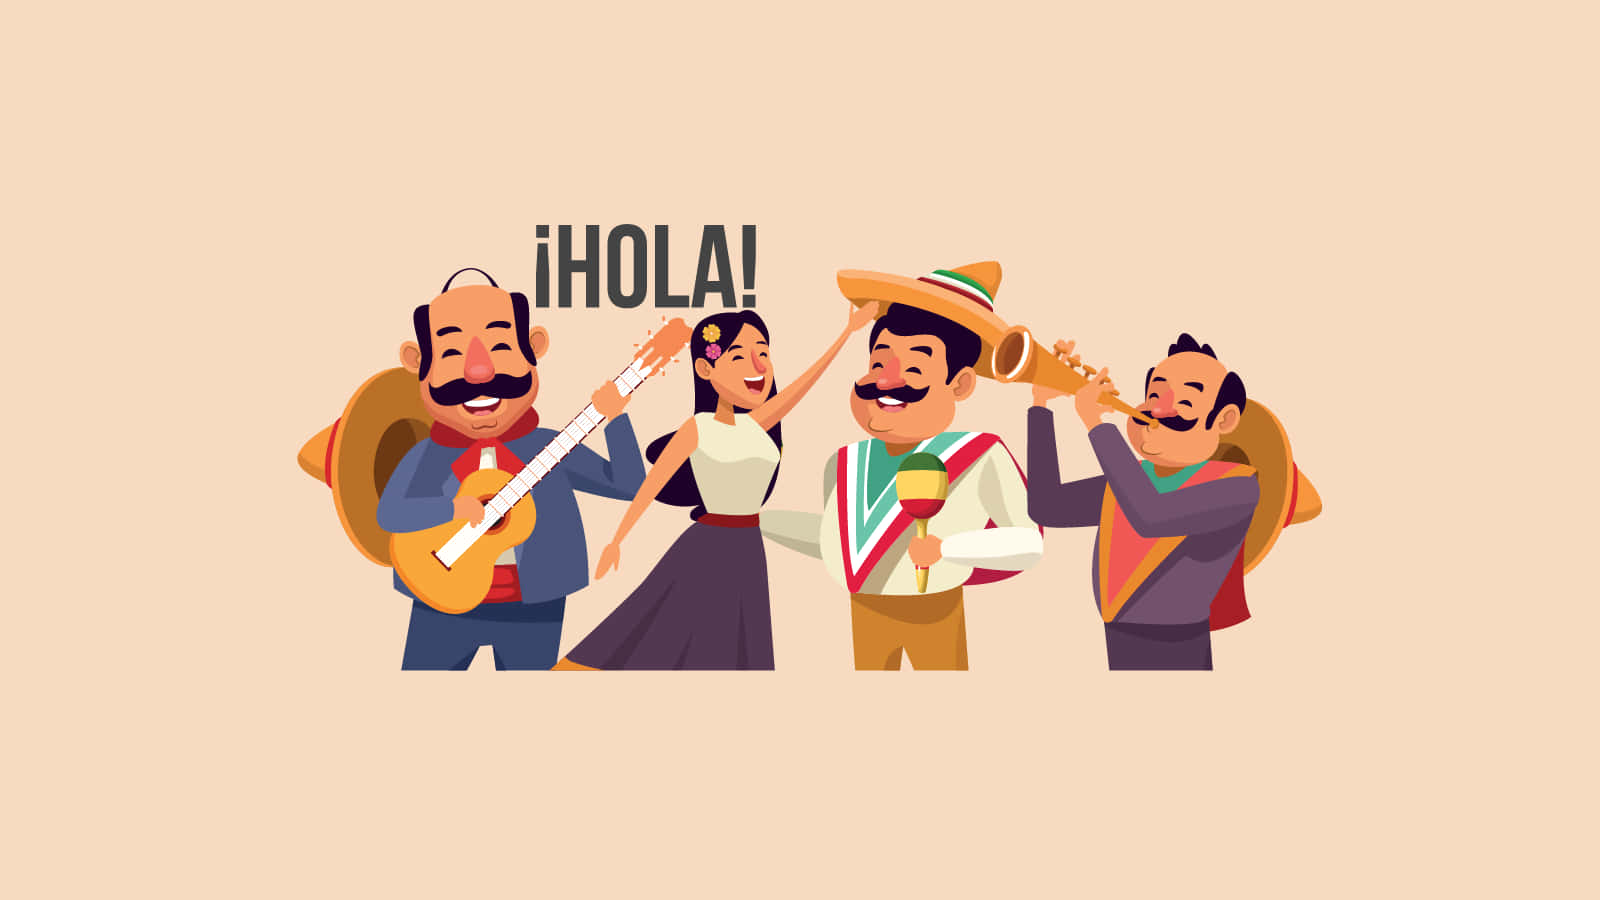 En gruppe mennesker i mexicanske kostumer spiller musik